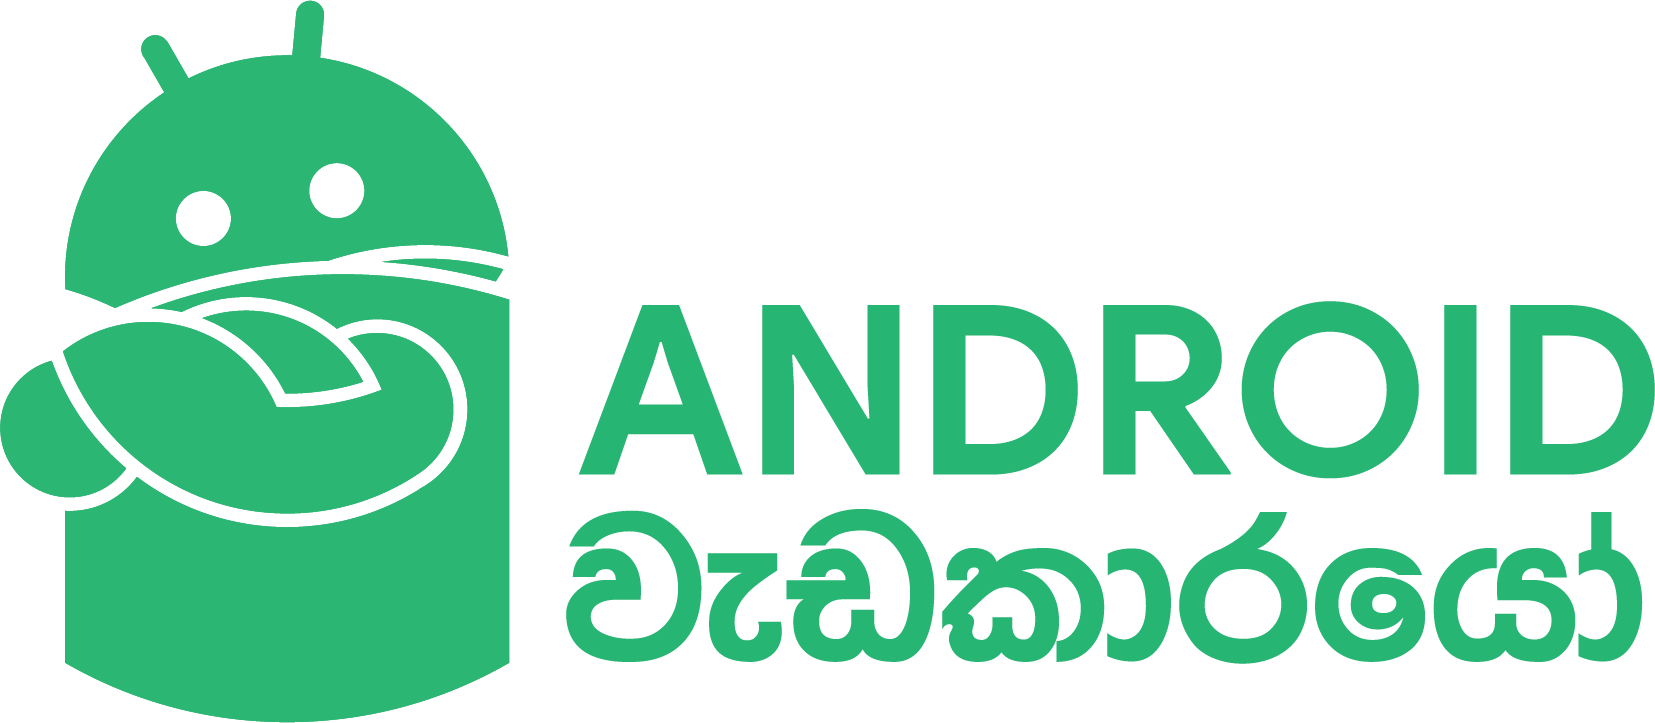 Android වැඩකාරයෝ - Sinhala Tech News provider